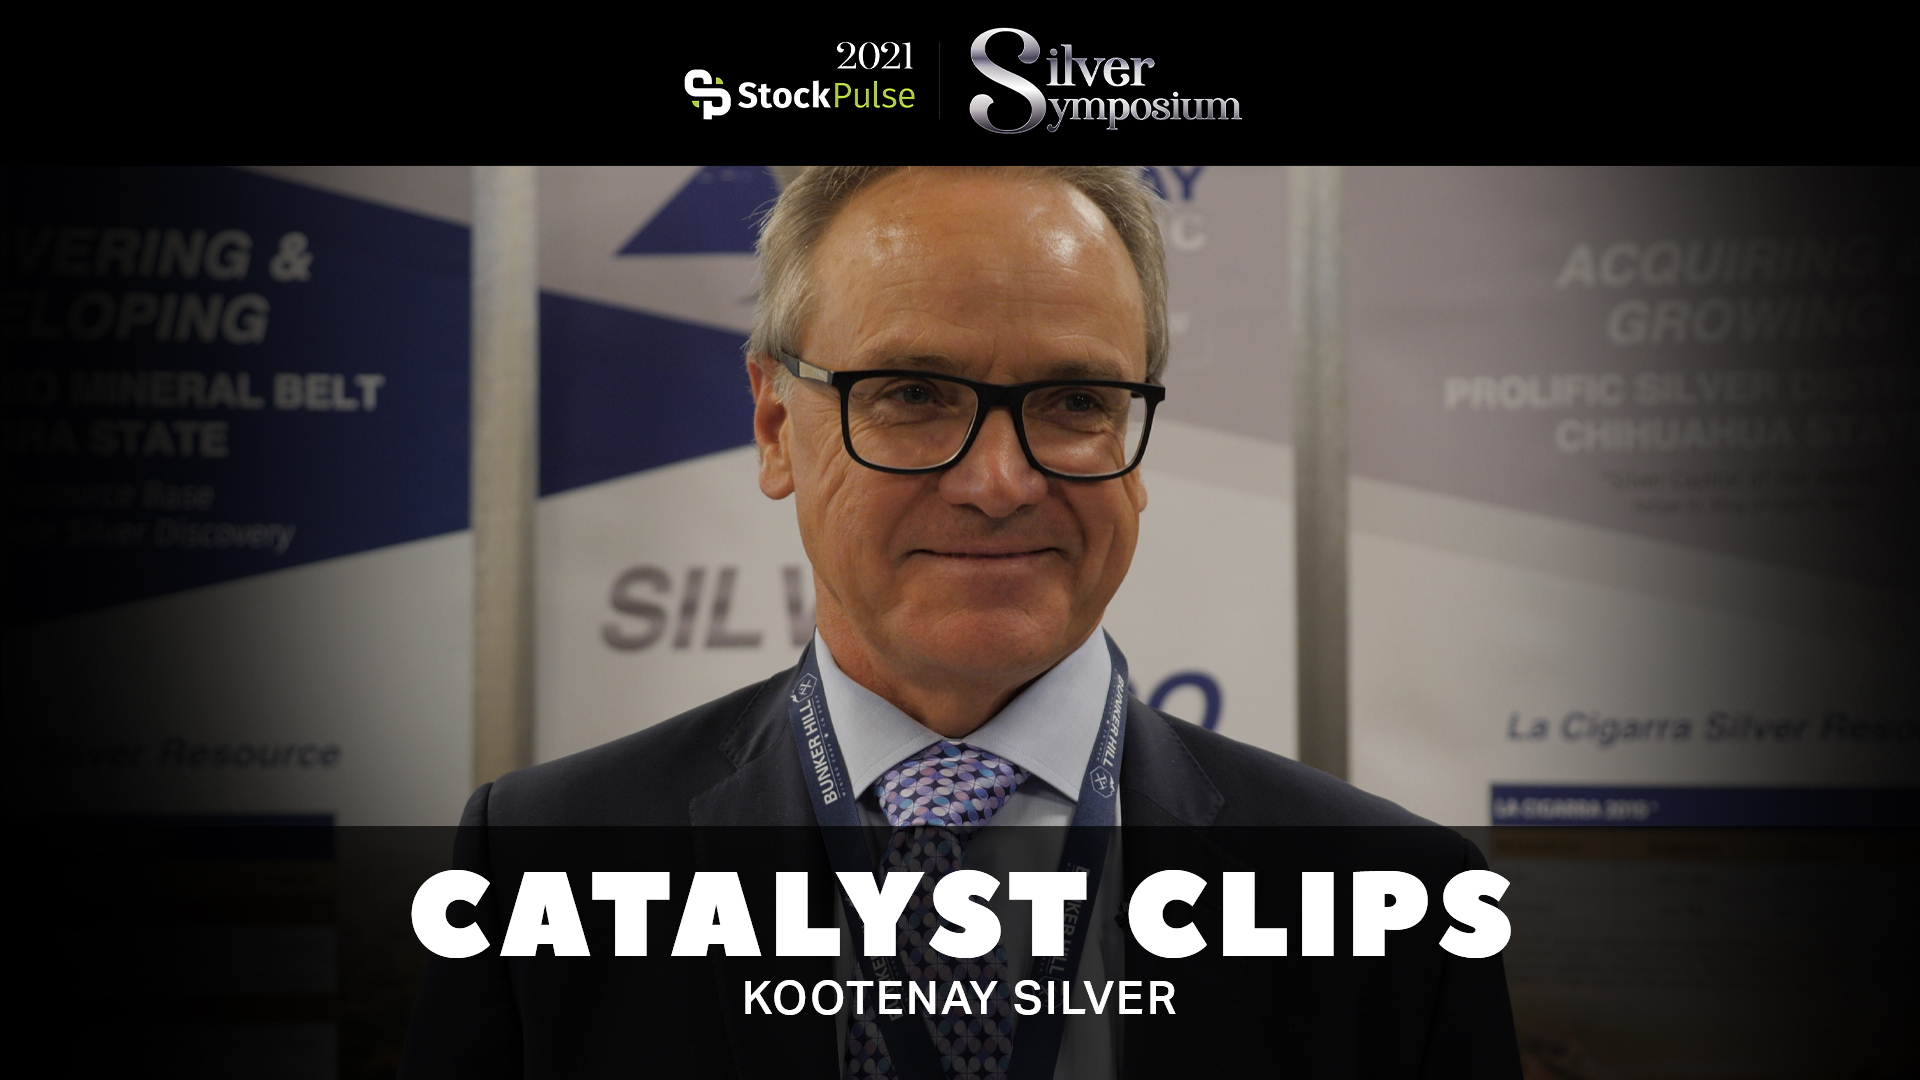 2021 StockPulse Silver Symposium Catalyst Clips | Jim McDonald of Kootenay Silver